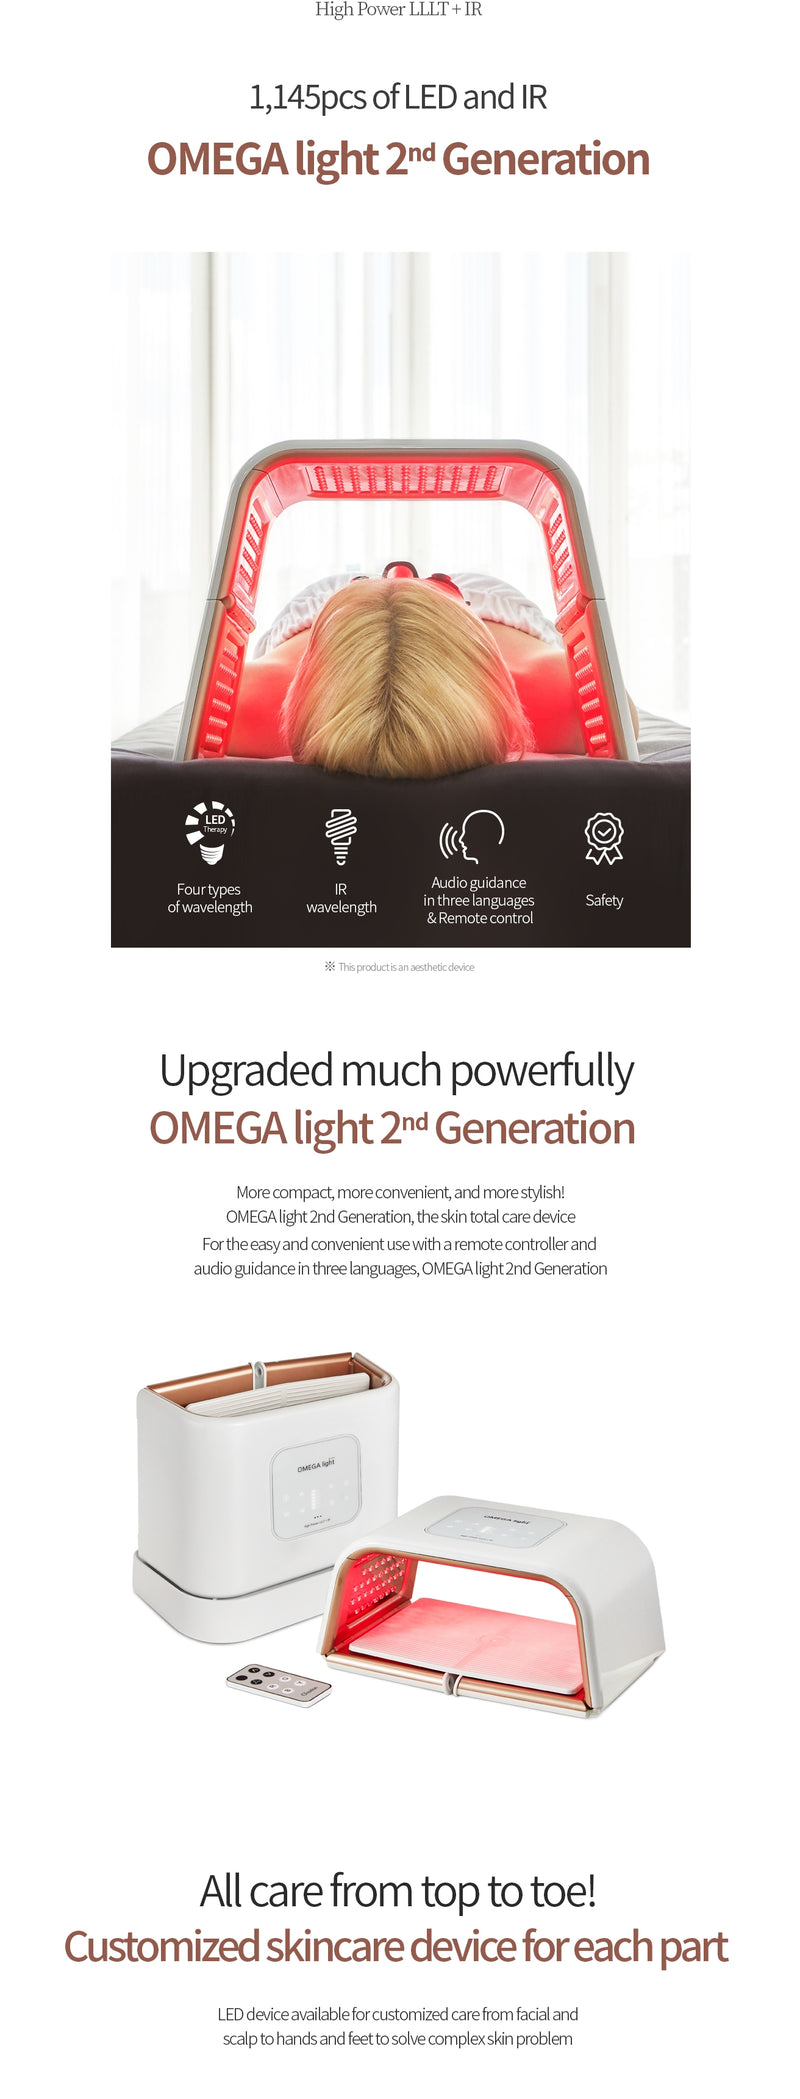 OMEGA Light 2nd Generation